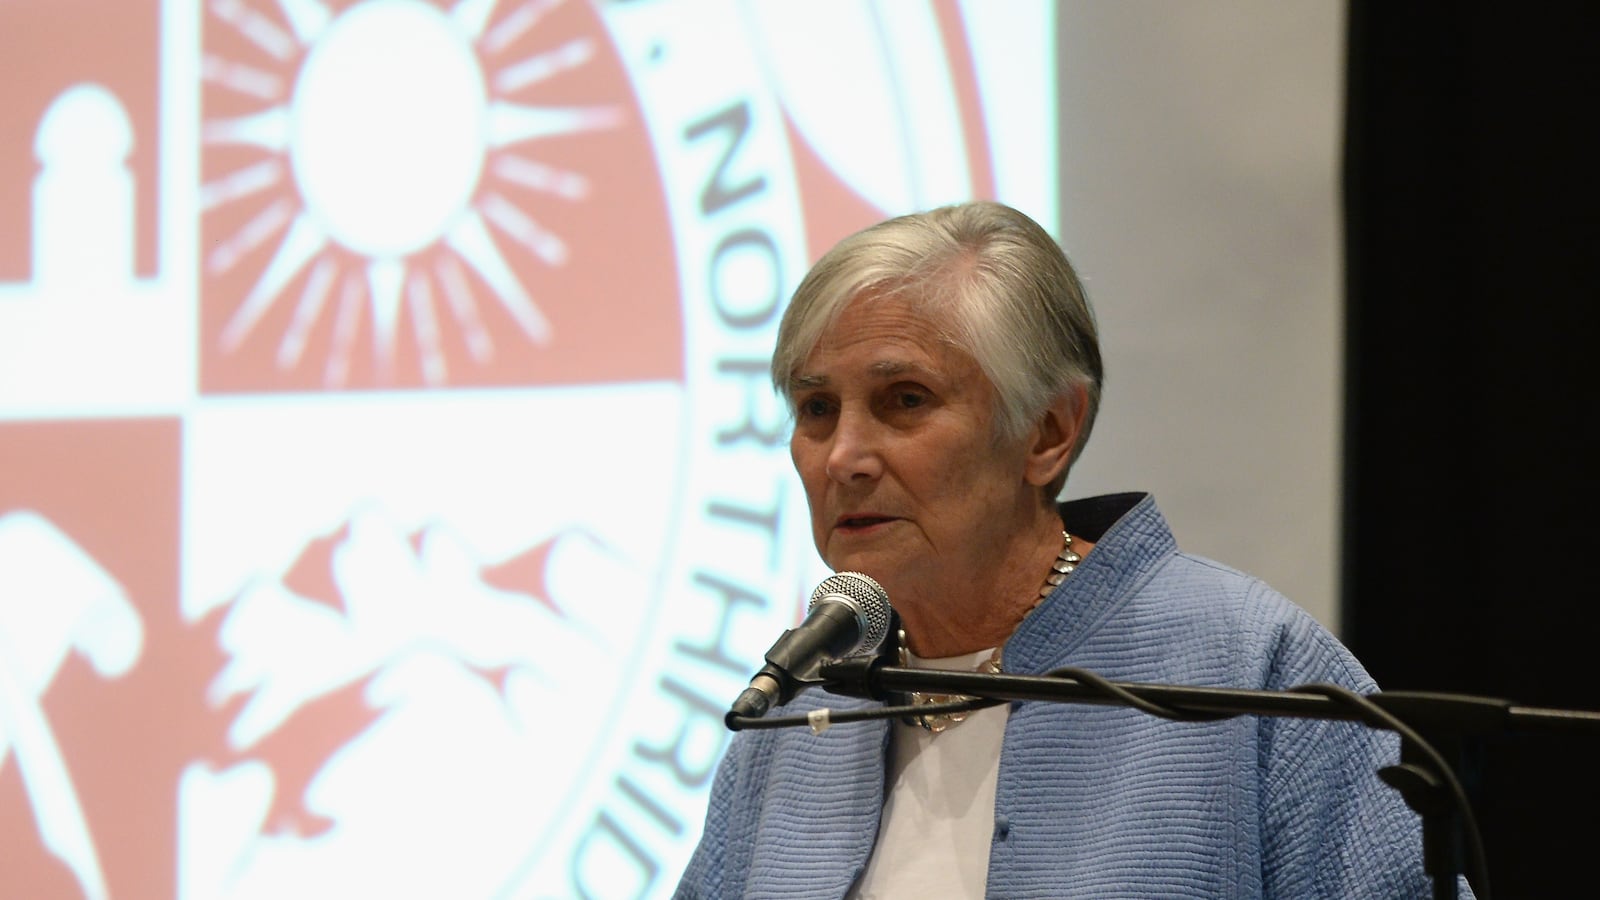 Diane Ravitch speaks at California State University Northridge. (Photo by Michael Buckner/Getty Images)